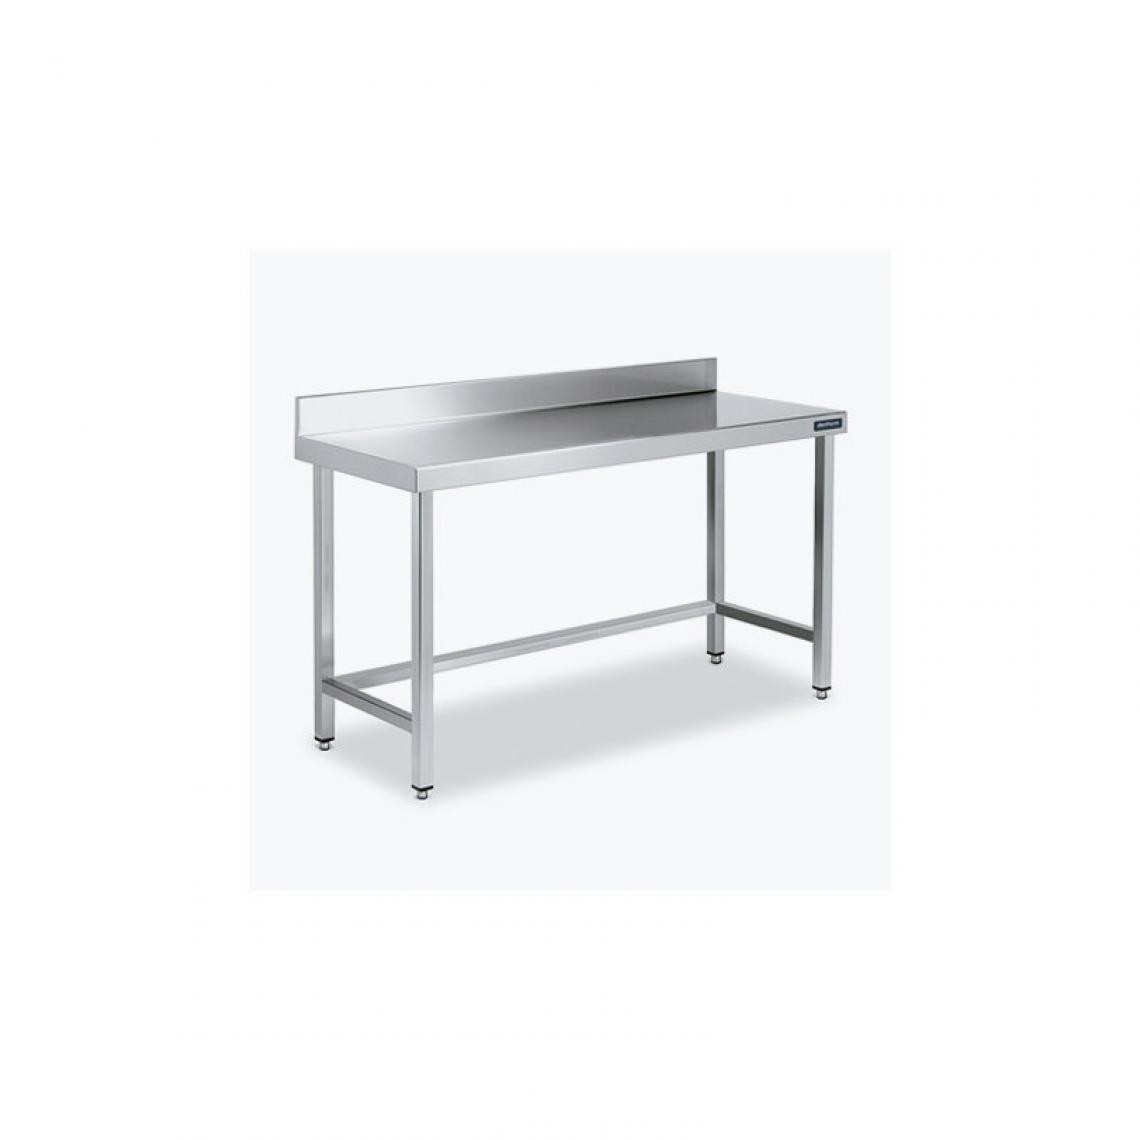 DISTFORM - Table Adossée 600x500 avec Renforts - Distform - Inox 18/102400x500x850mm - Tables à manger